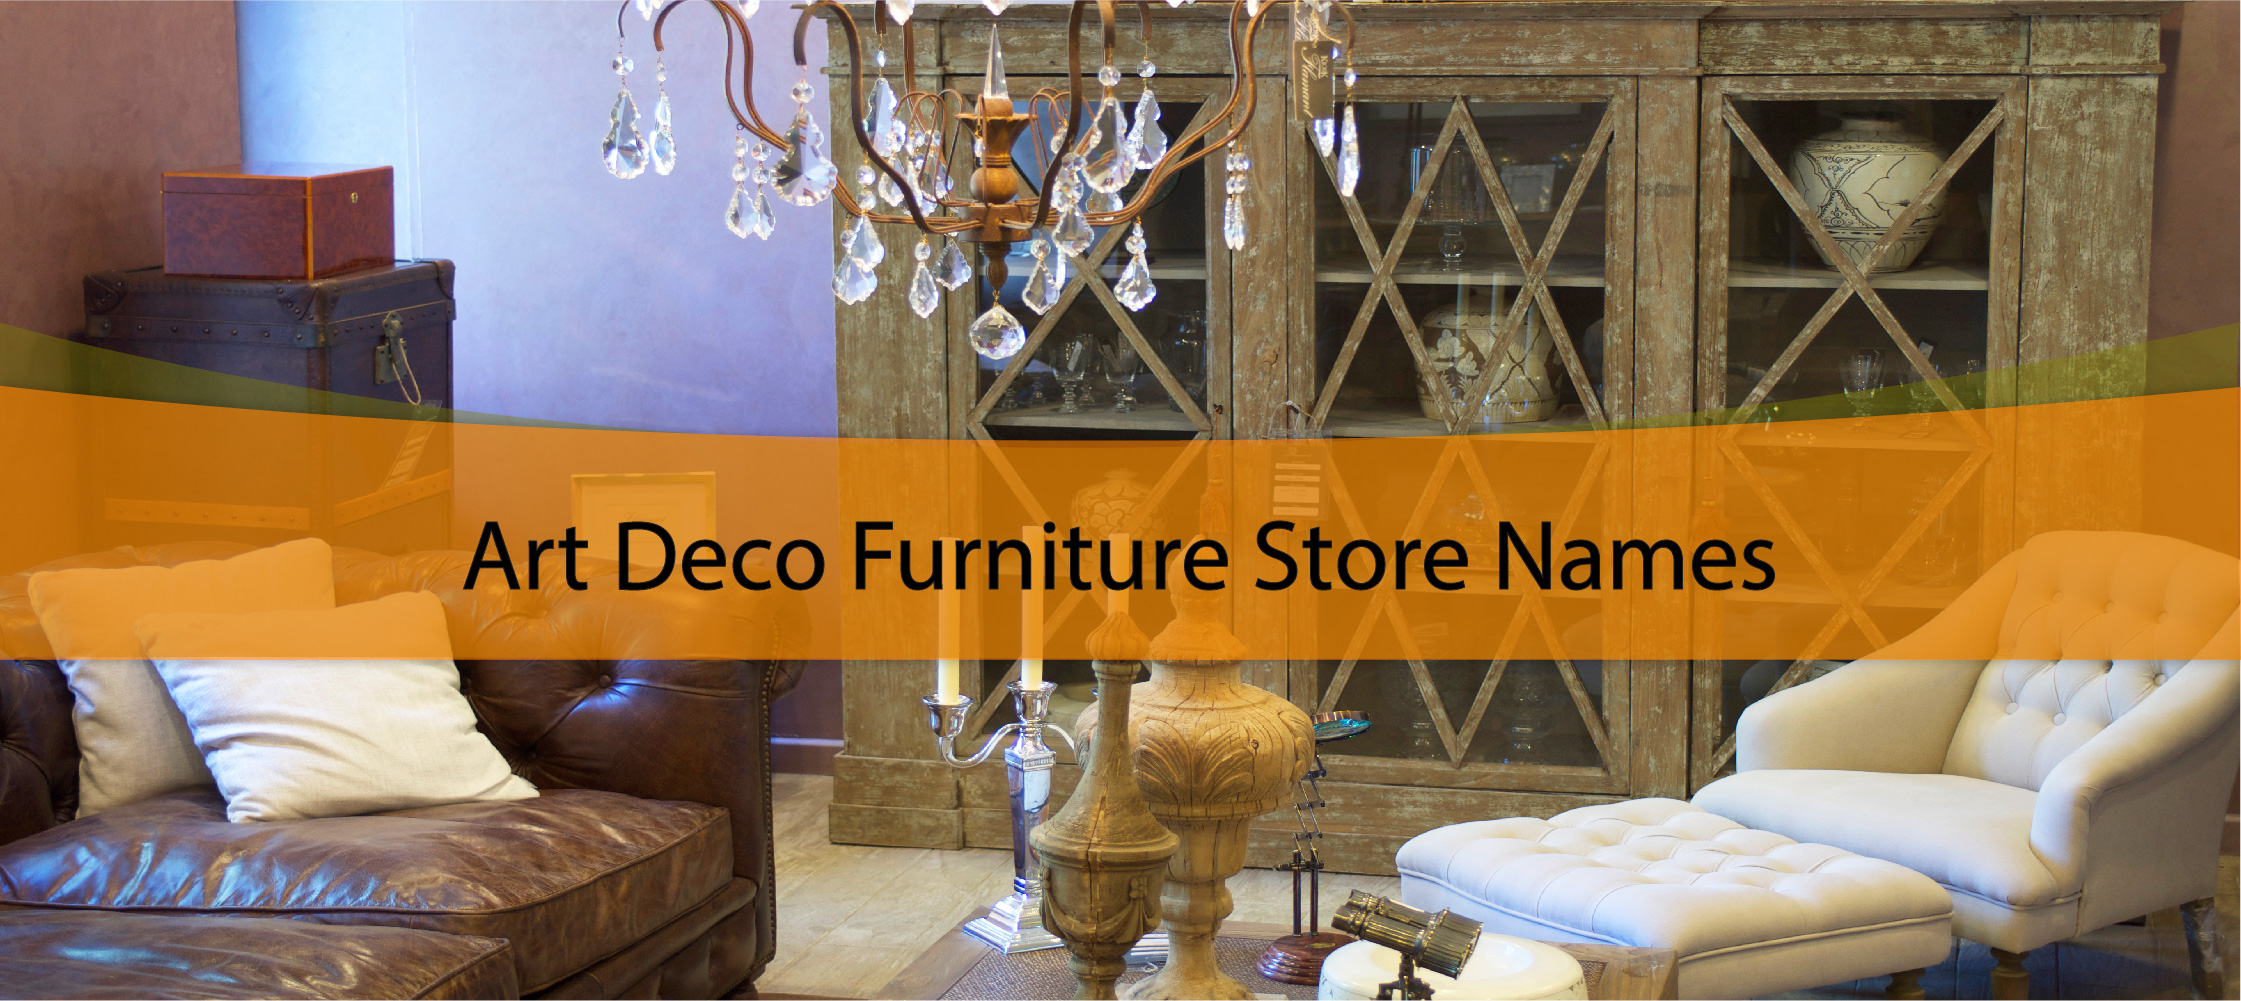 Art Deco Furniture Store Names